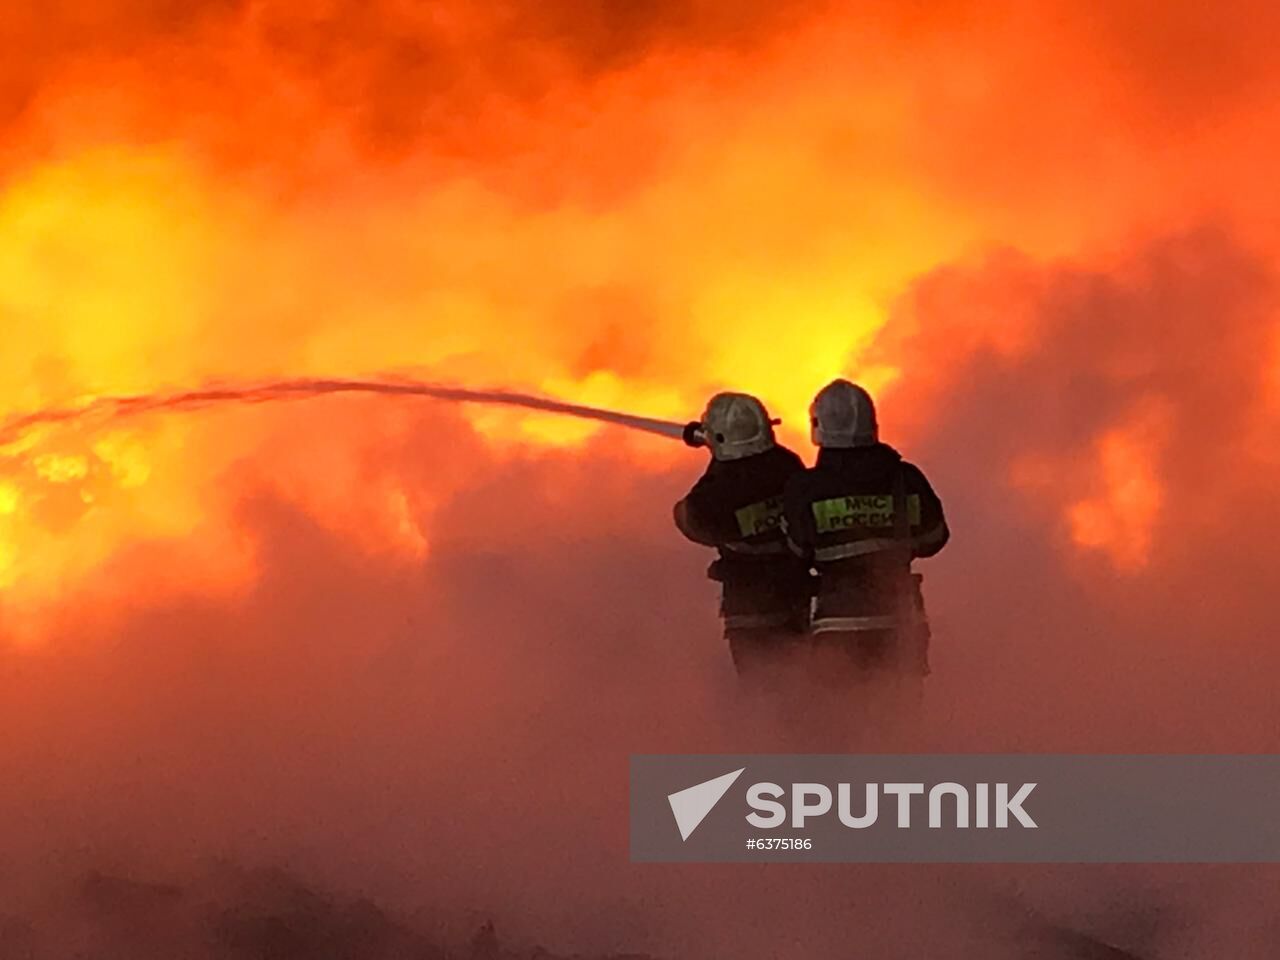 Russia Industrial Zone Fire